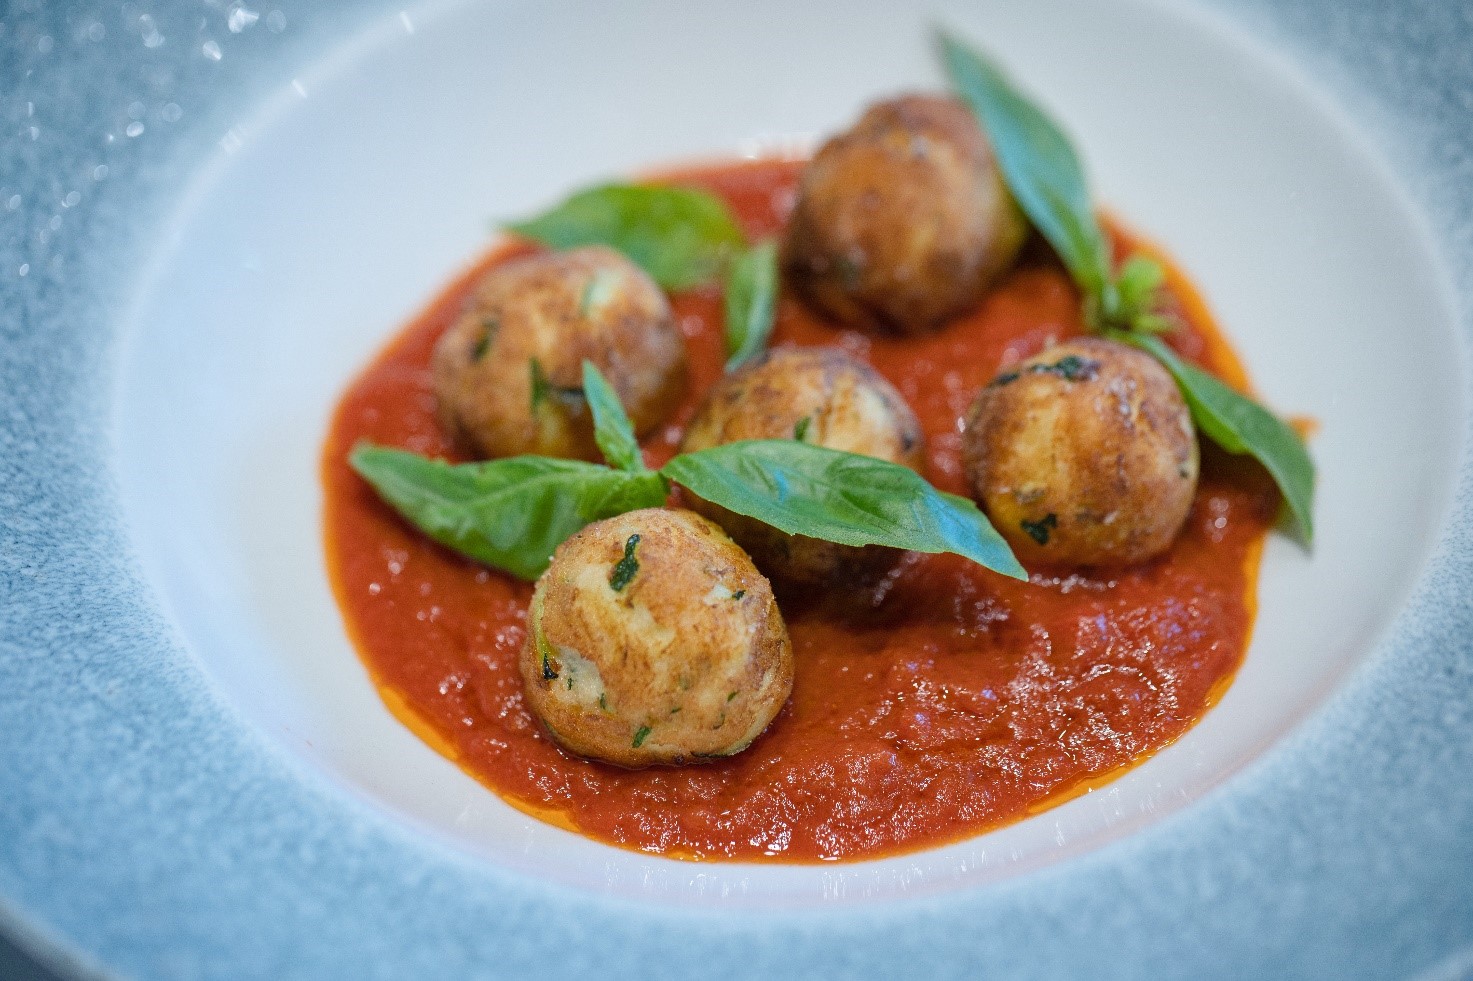 Fried courgette ricotta balls in tomato sauce